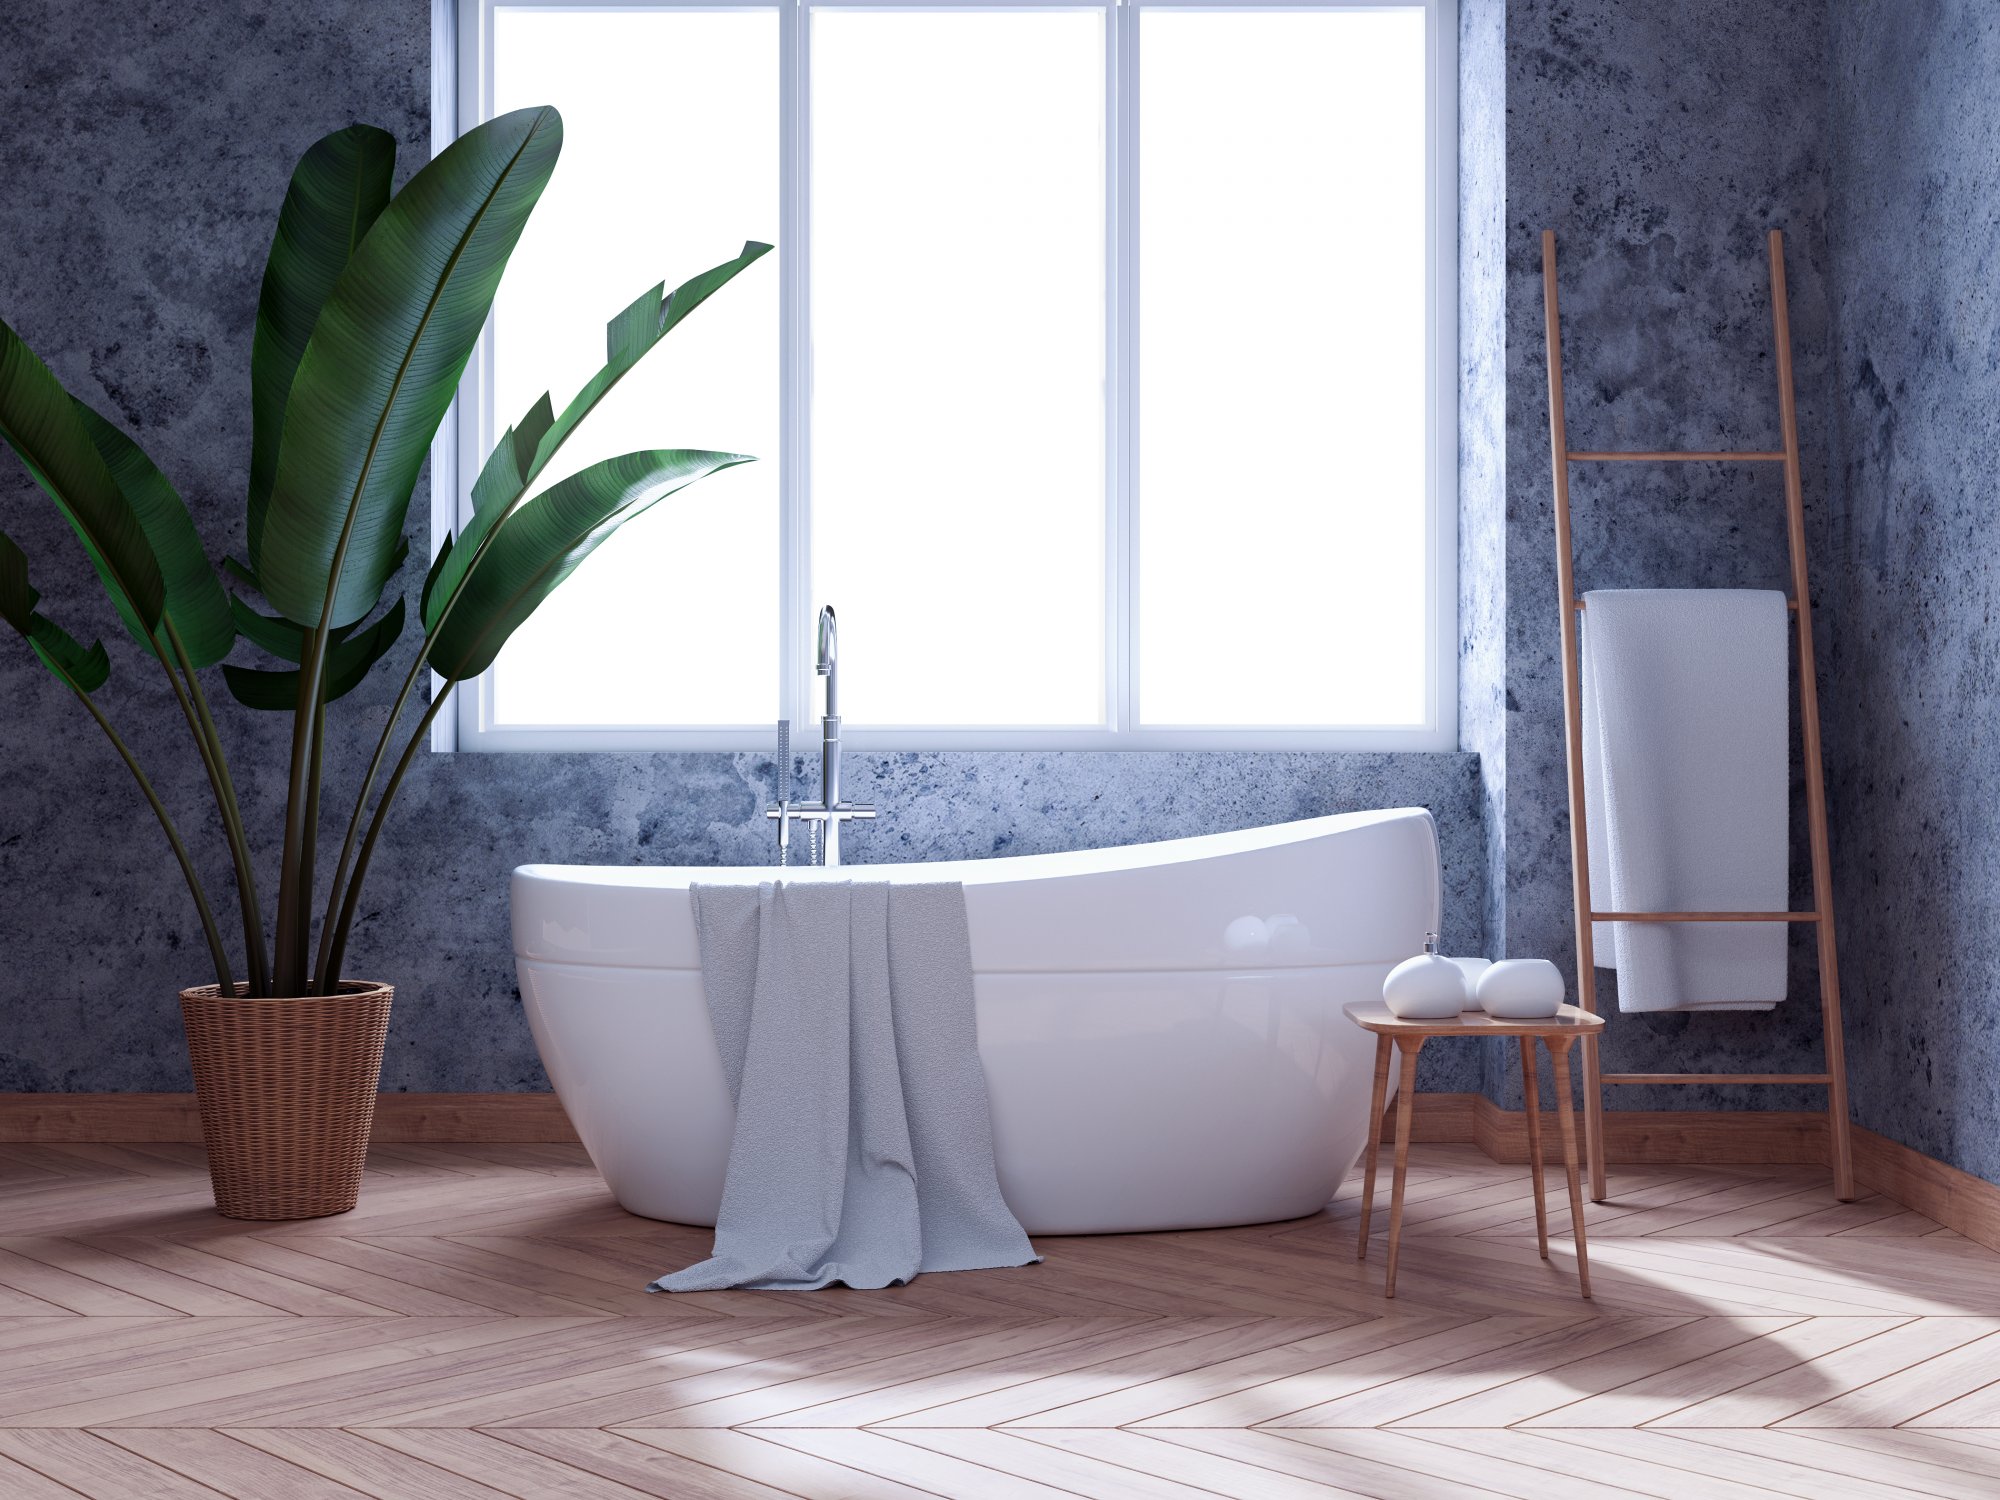 modern-loft-bathroom-interior-design-white-bathtub-concrete-wall-3d-render.jpg